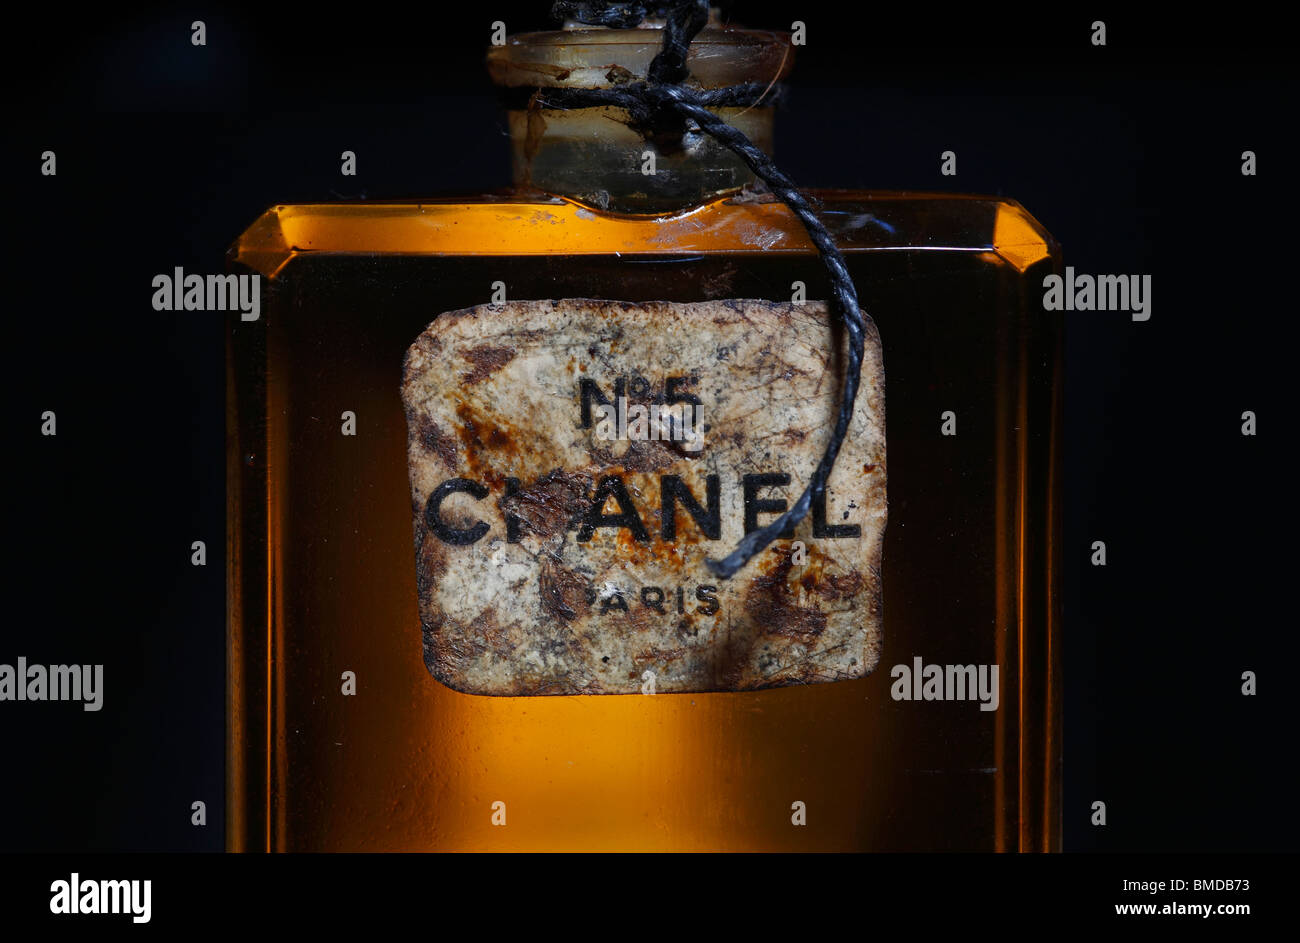 Viejo frasco de perfume Chanel nº5 con etiqueta angustiado Foto de stock